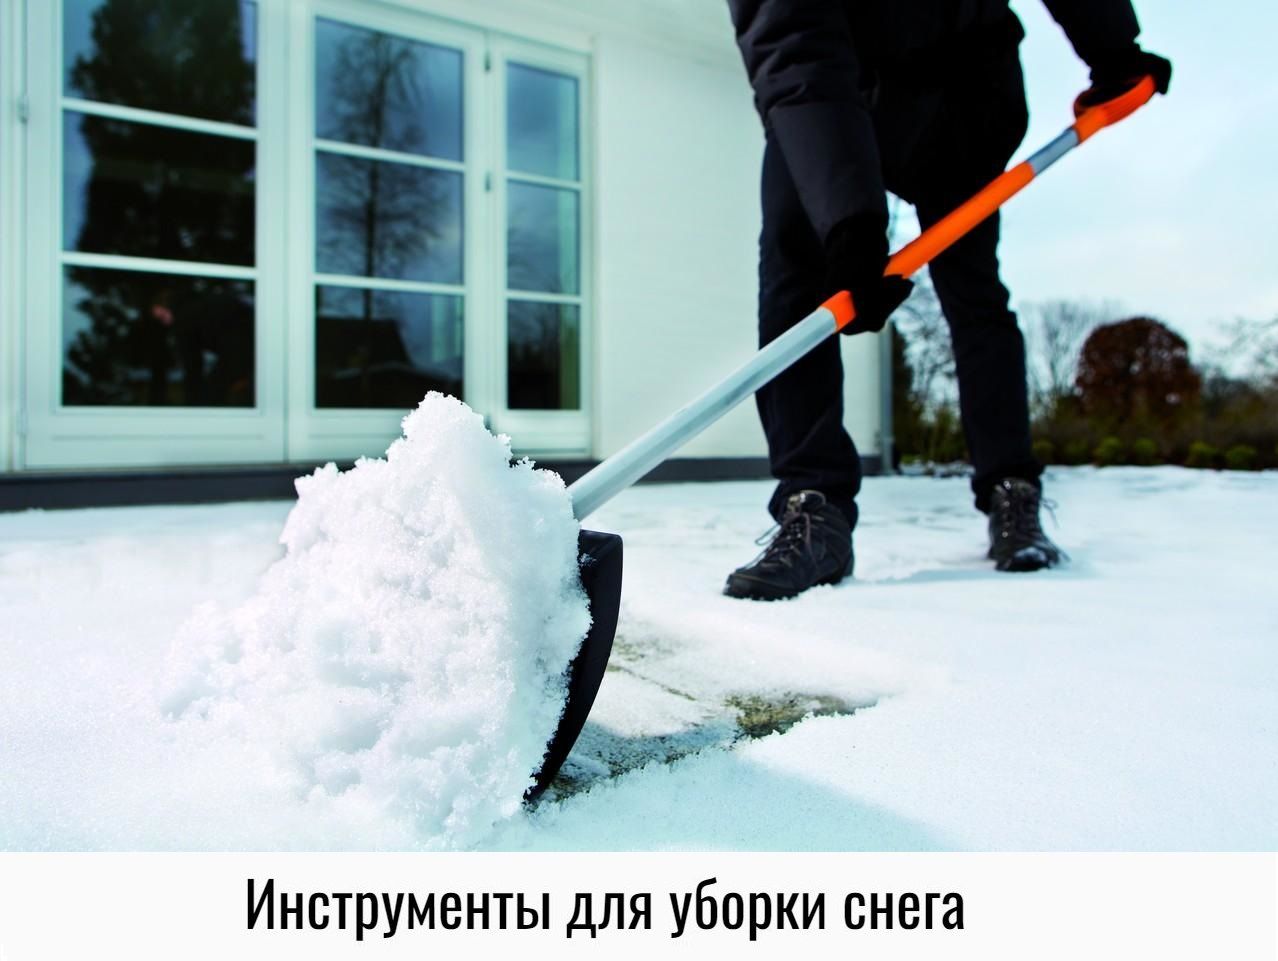 Убрать снег с крыши дома. Уборка снега. Убирает снег. Лопата для снега. Уборкака снега.